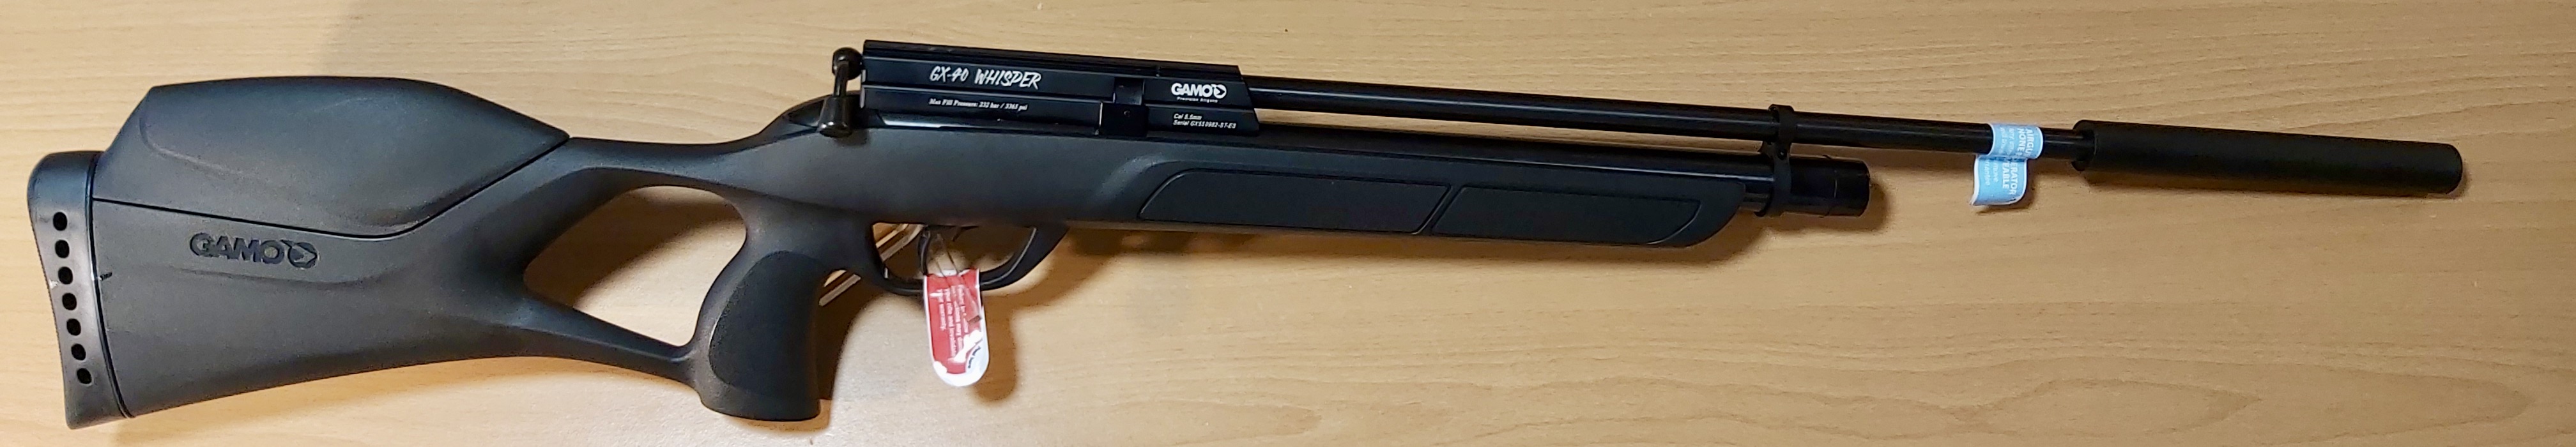 De nieuwe gamo GX-40 whisper met aluminium demper